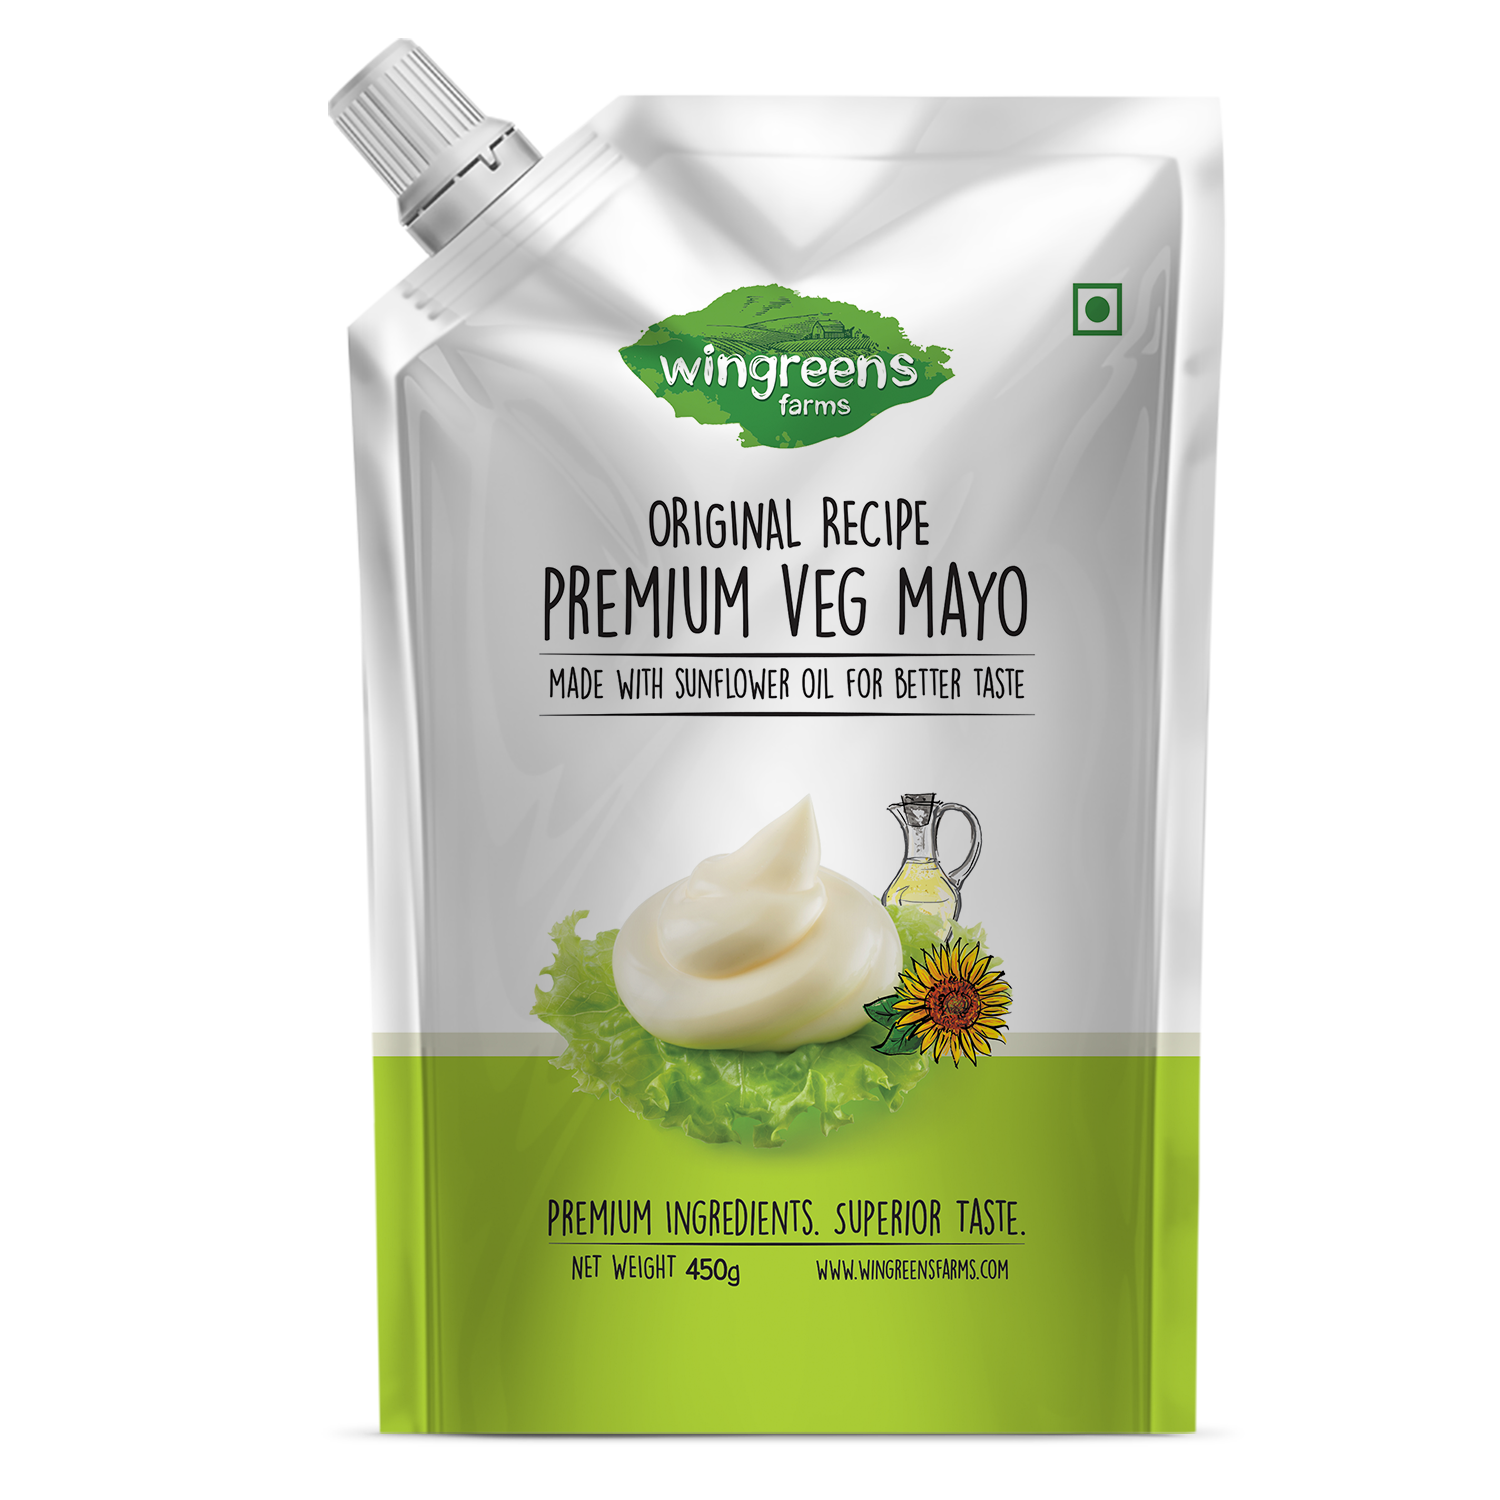 Wingreens Farms Premium Veg Mayo Image